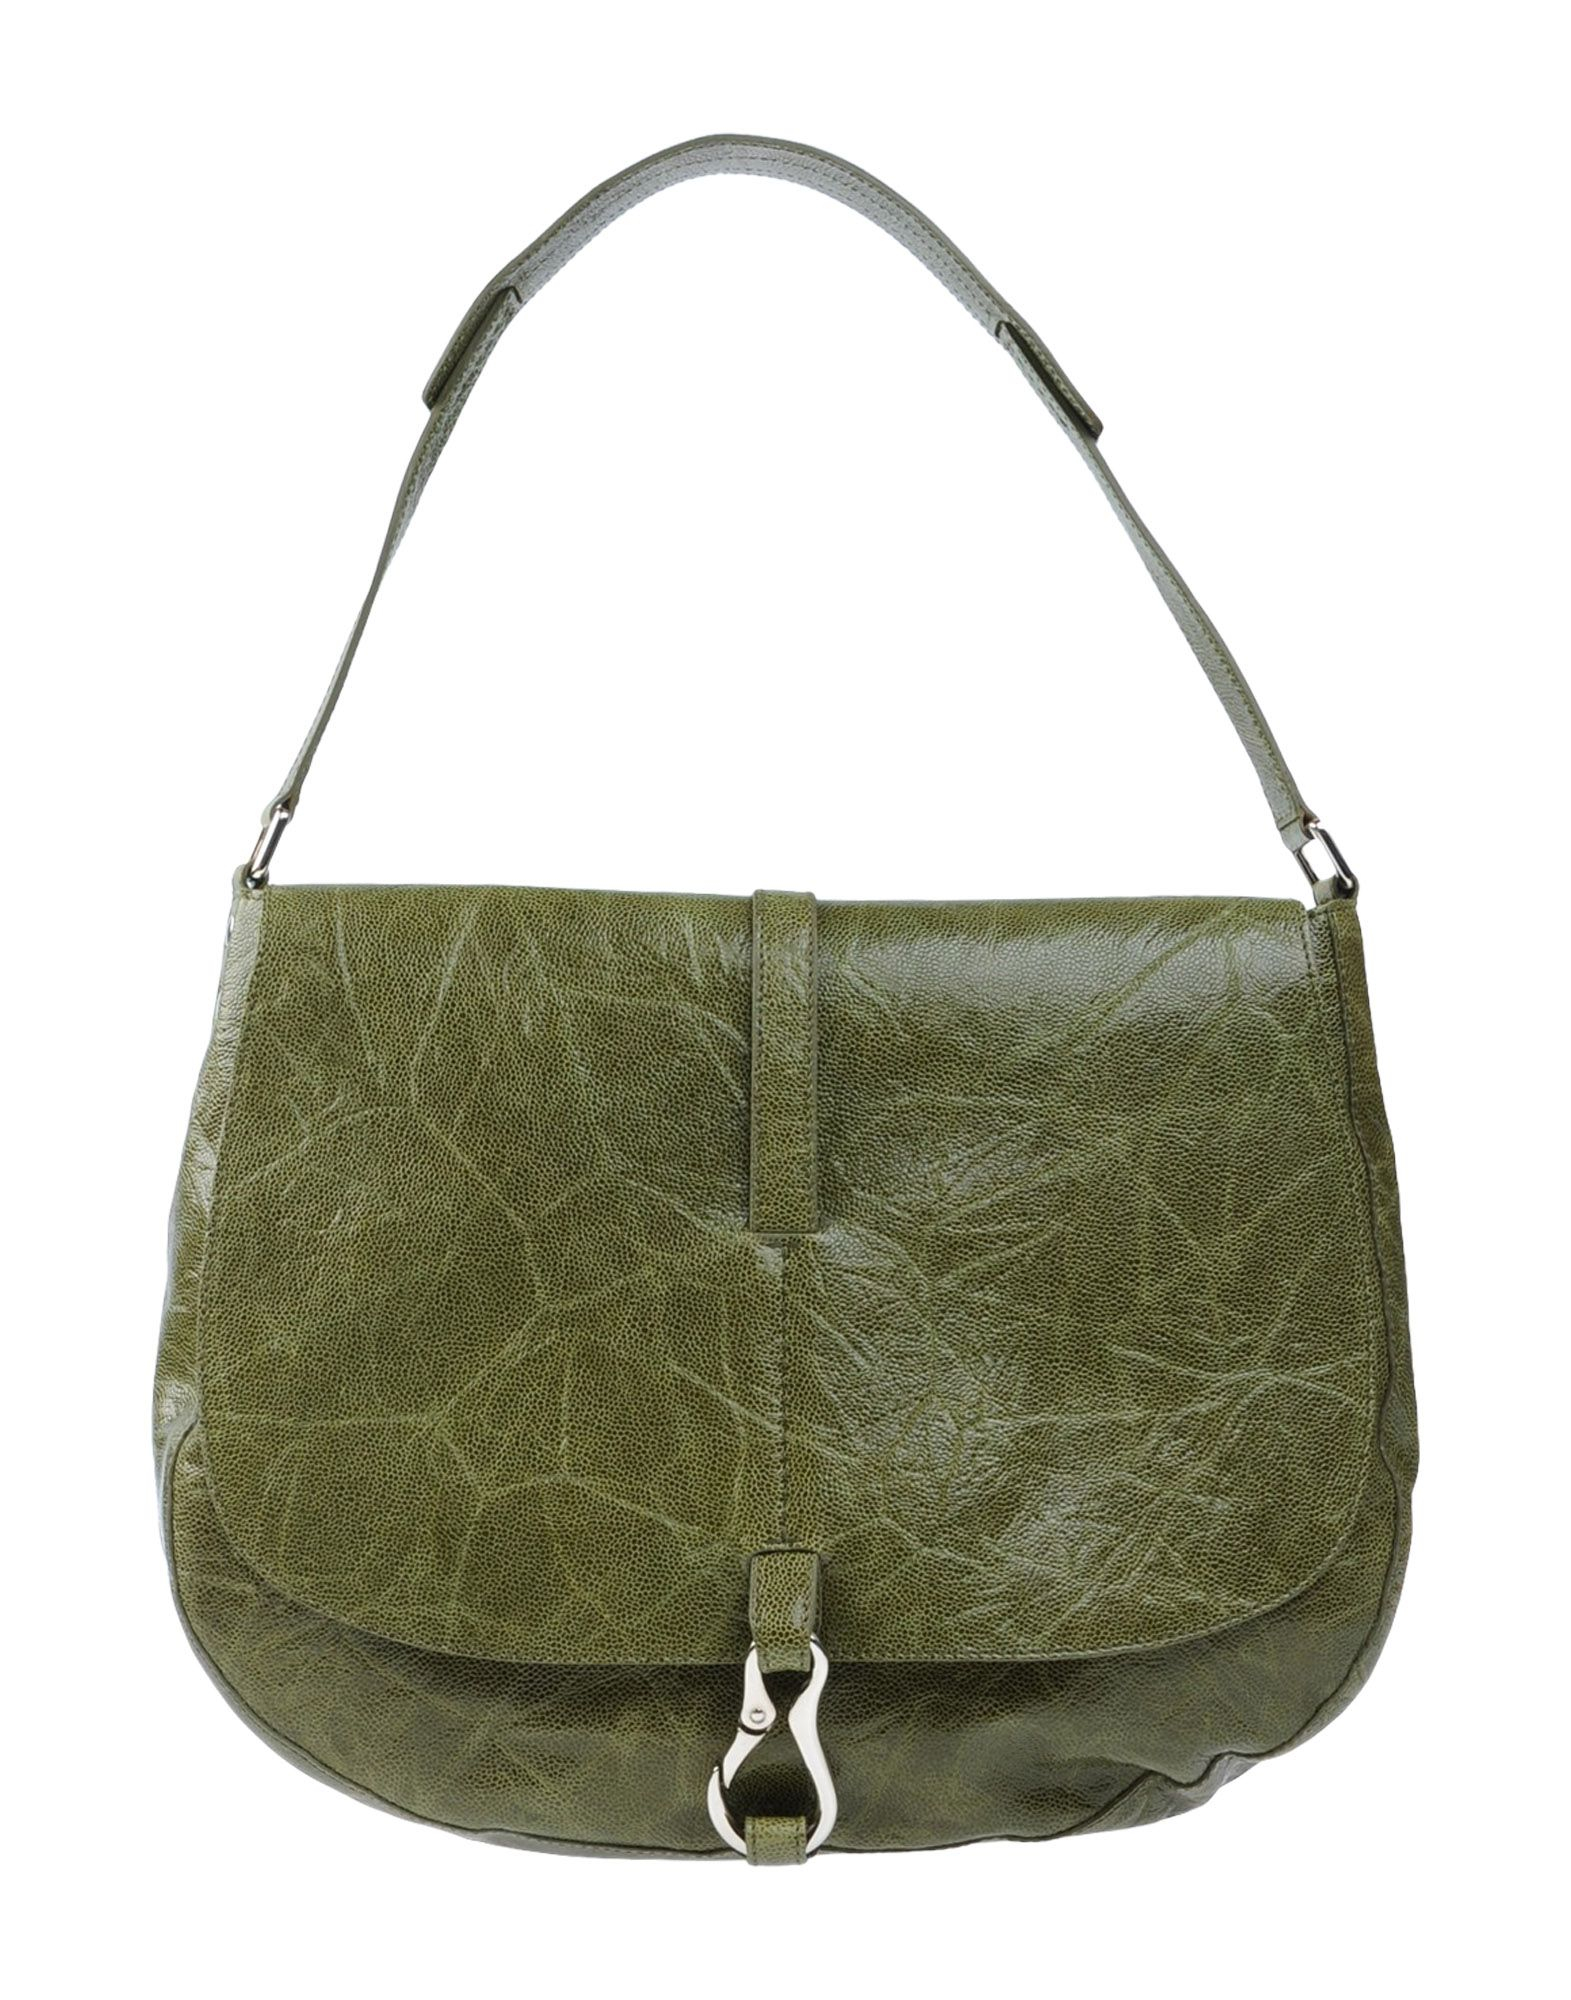 Lyst - Orciani Shoulder Bag in Green